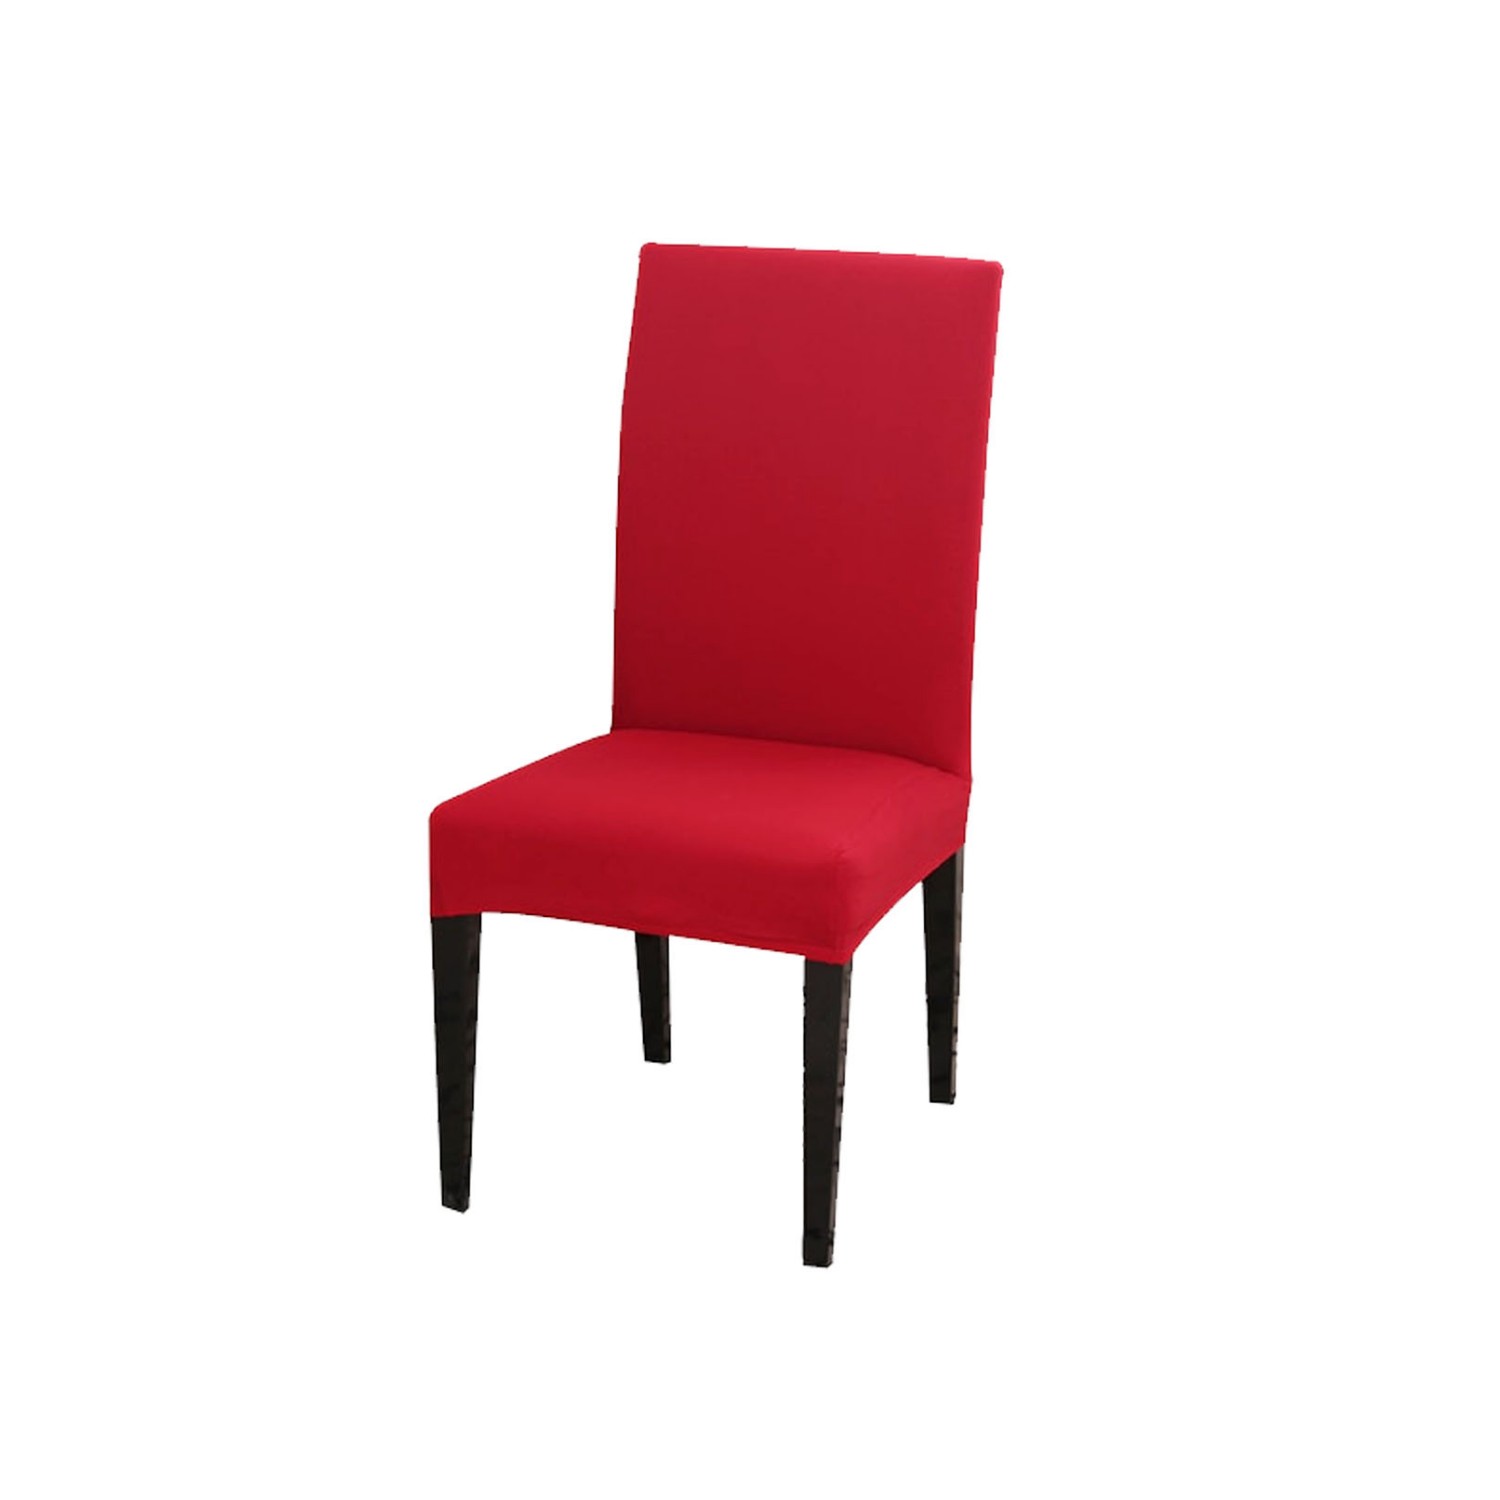 Чехол на стул LuxAlto Коллекция Jersey красный - фото 1